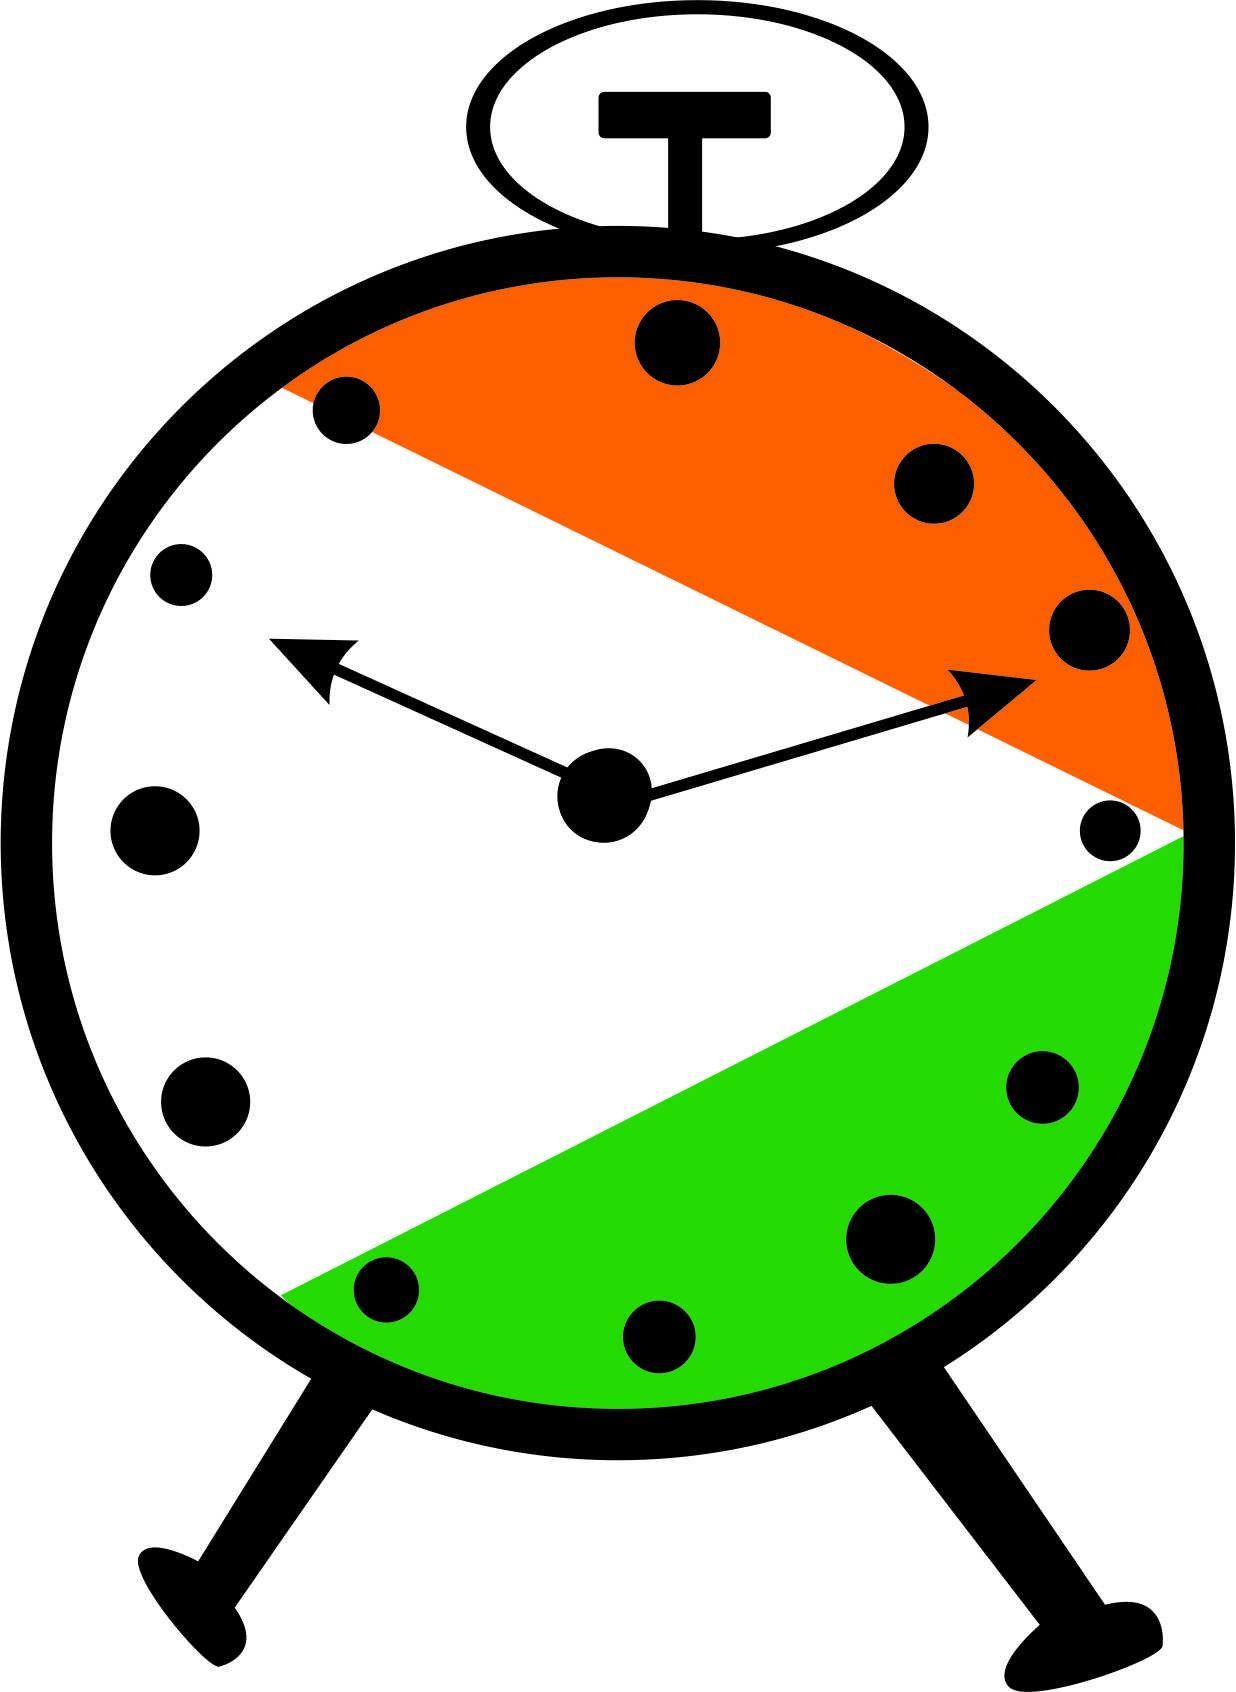 NCP Logo - Pin by Harishchandra Kandpal on NCP logo | Clock, Home decor, Logos